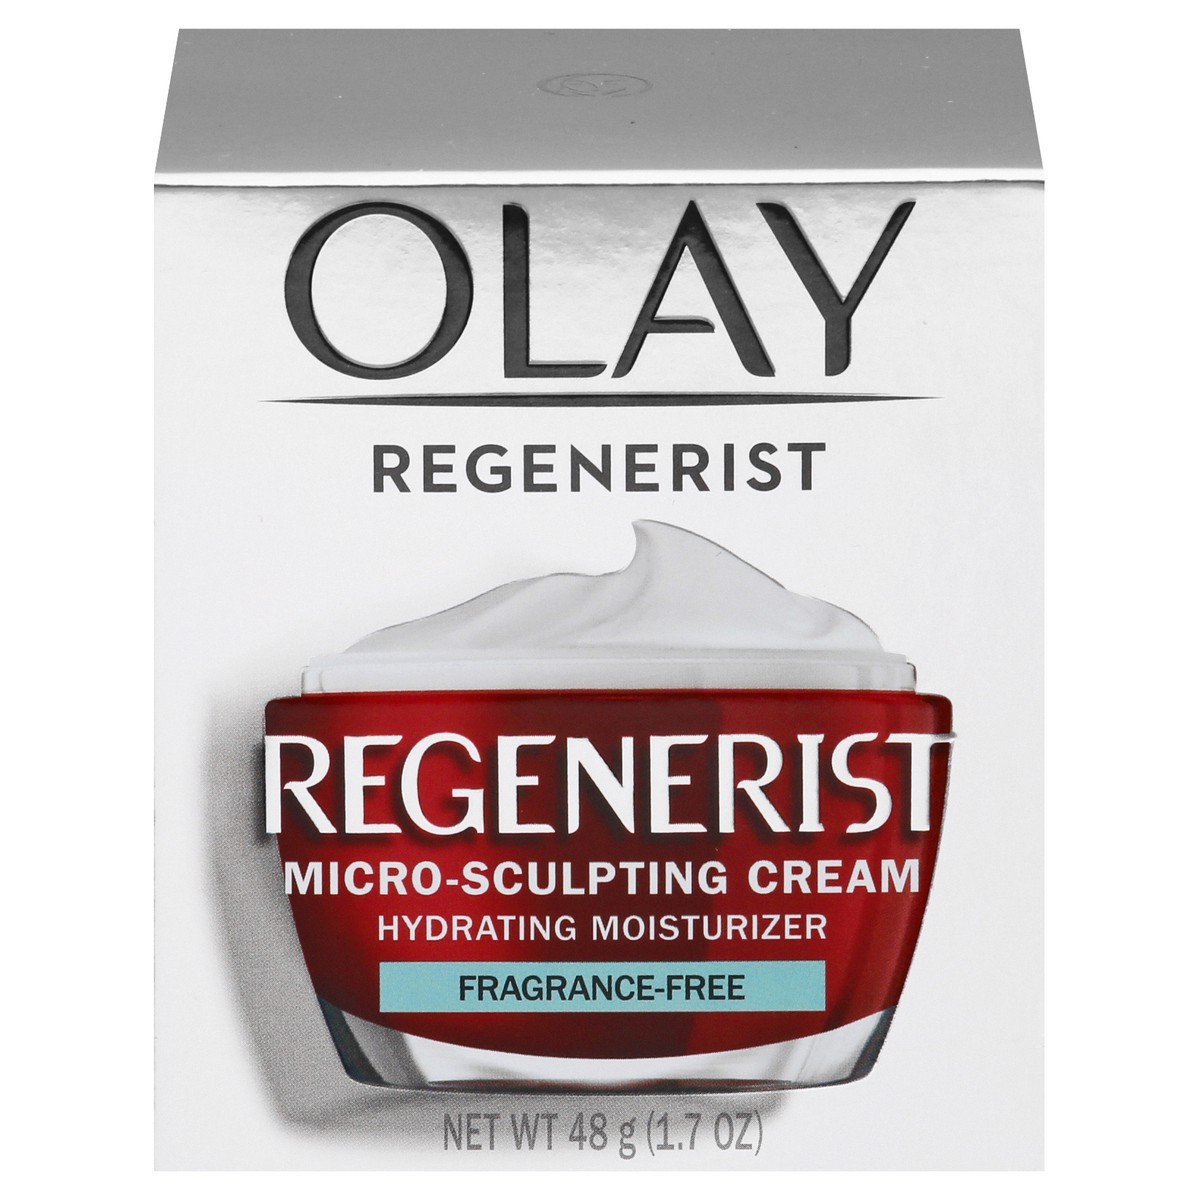 Olay Regenerist Micro-Sculpting Cream Face Moisturizer, Fragrance-Free - 1.7oz  1.7 oz